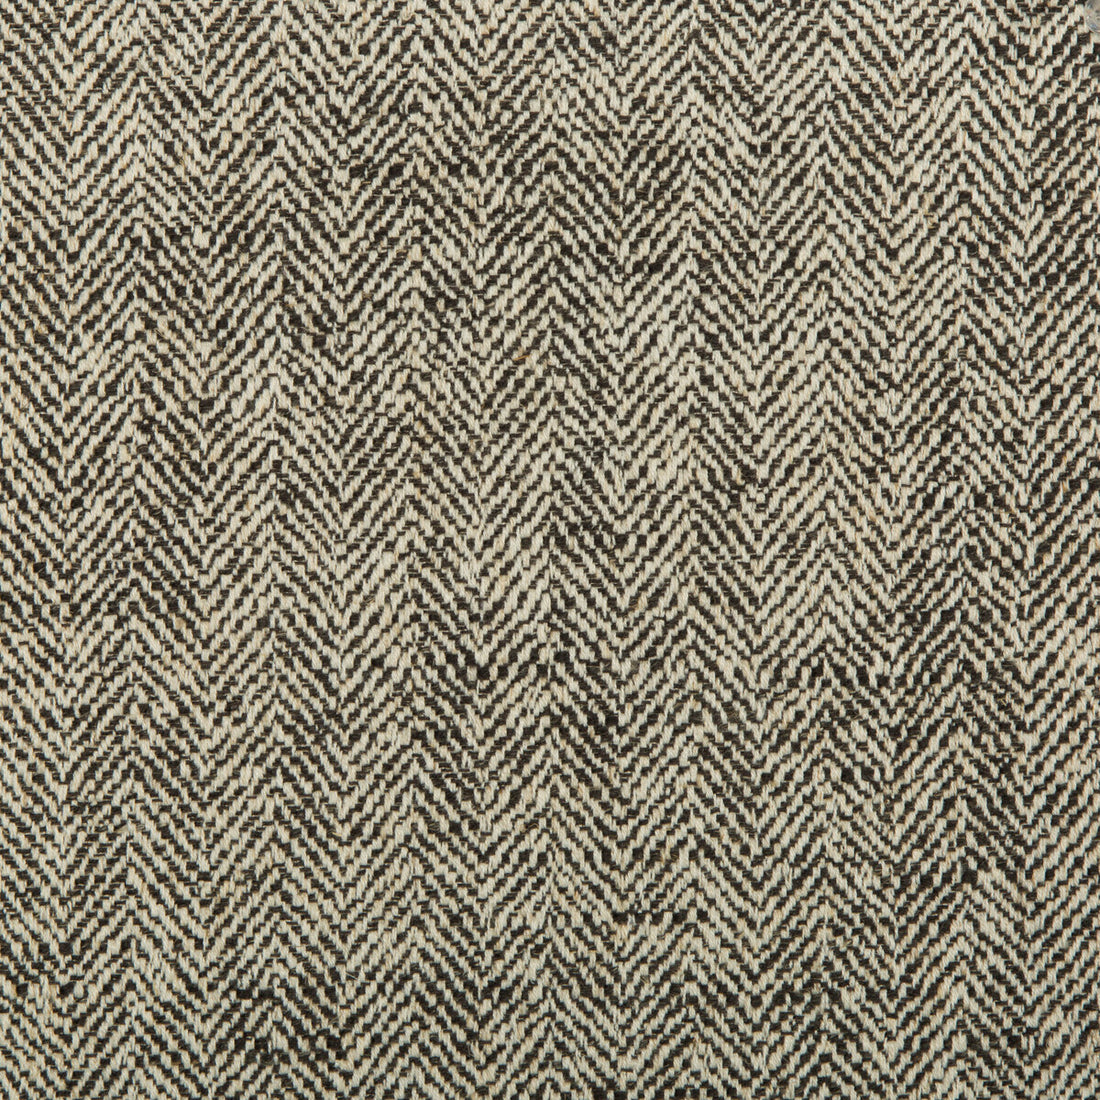 Kravet Smart fabric in 35228-81 color - pattern 35228.81.0 - by Kravet Smart in the Performance Kravetarmor collection